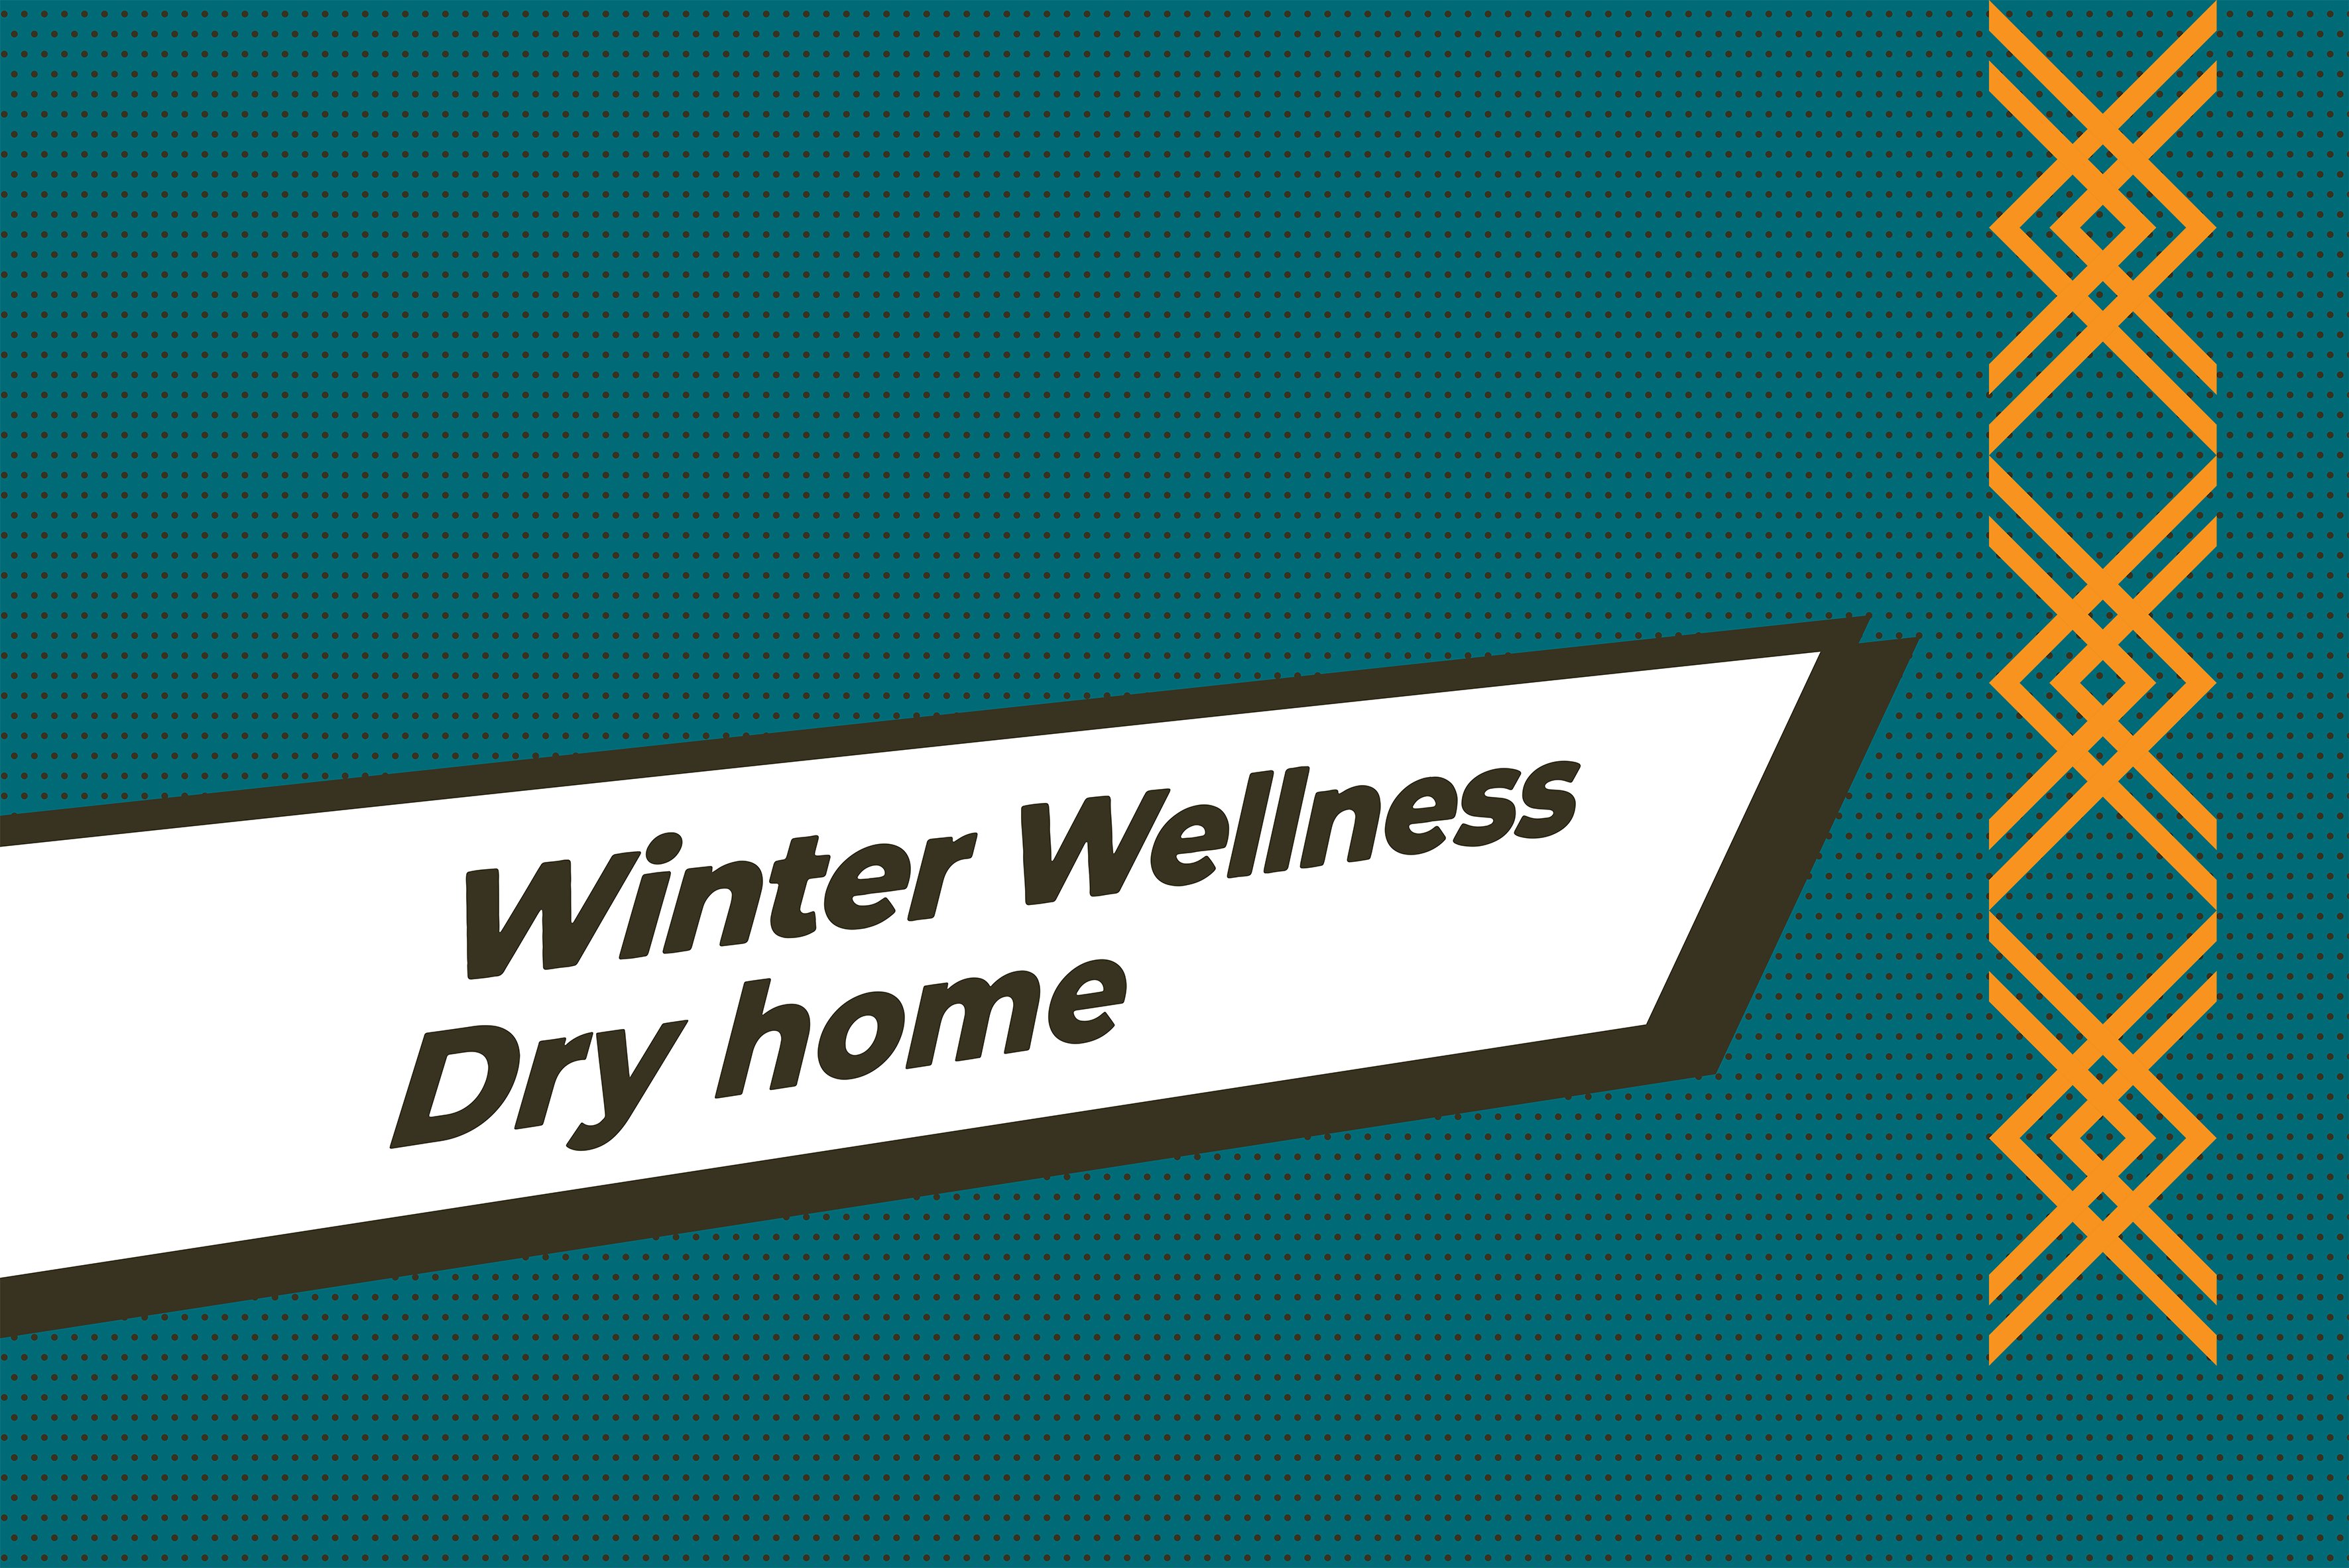 Winter Wellness Dry home banner image 